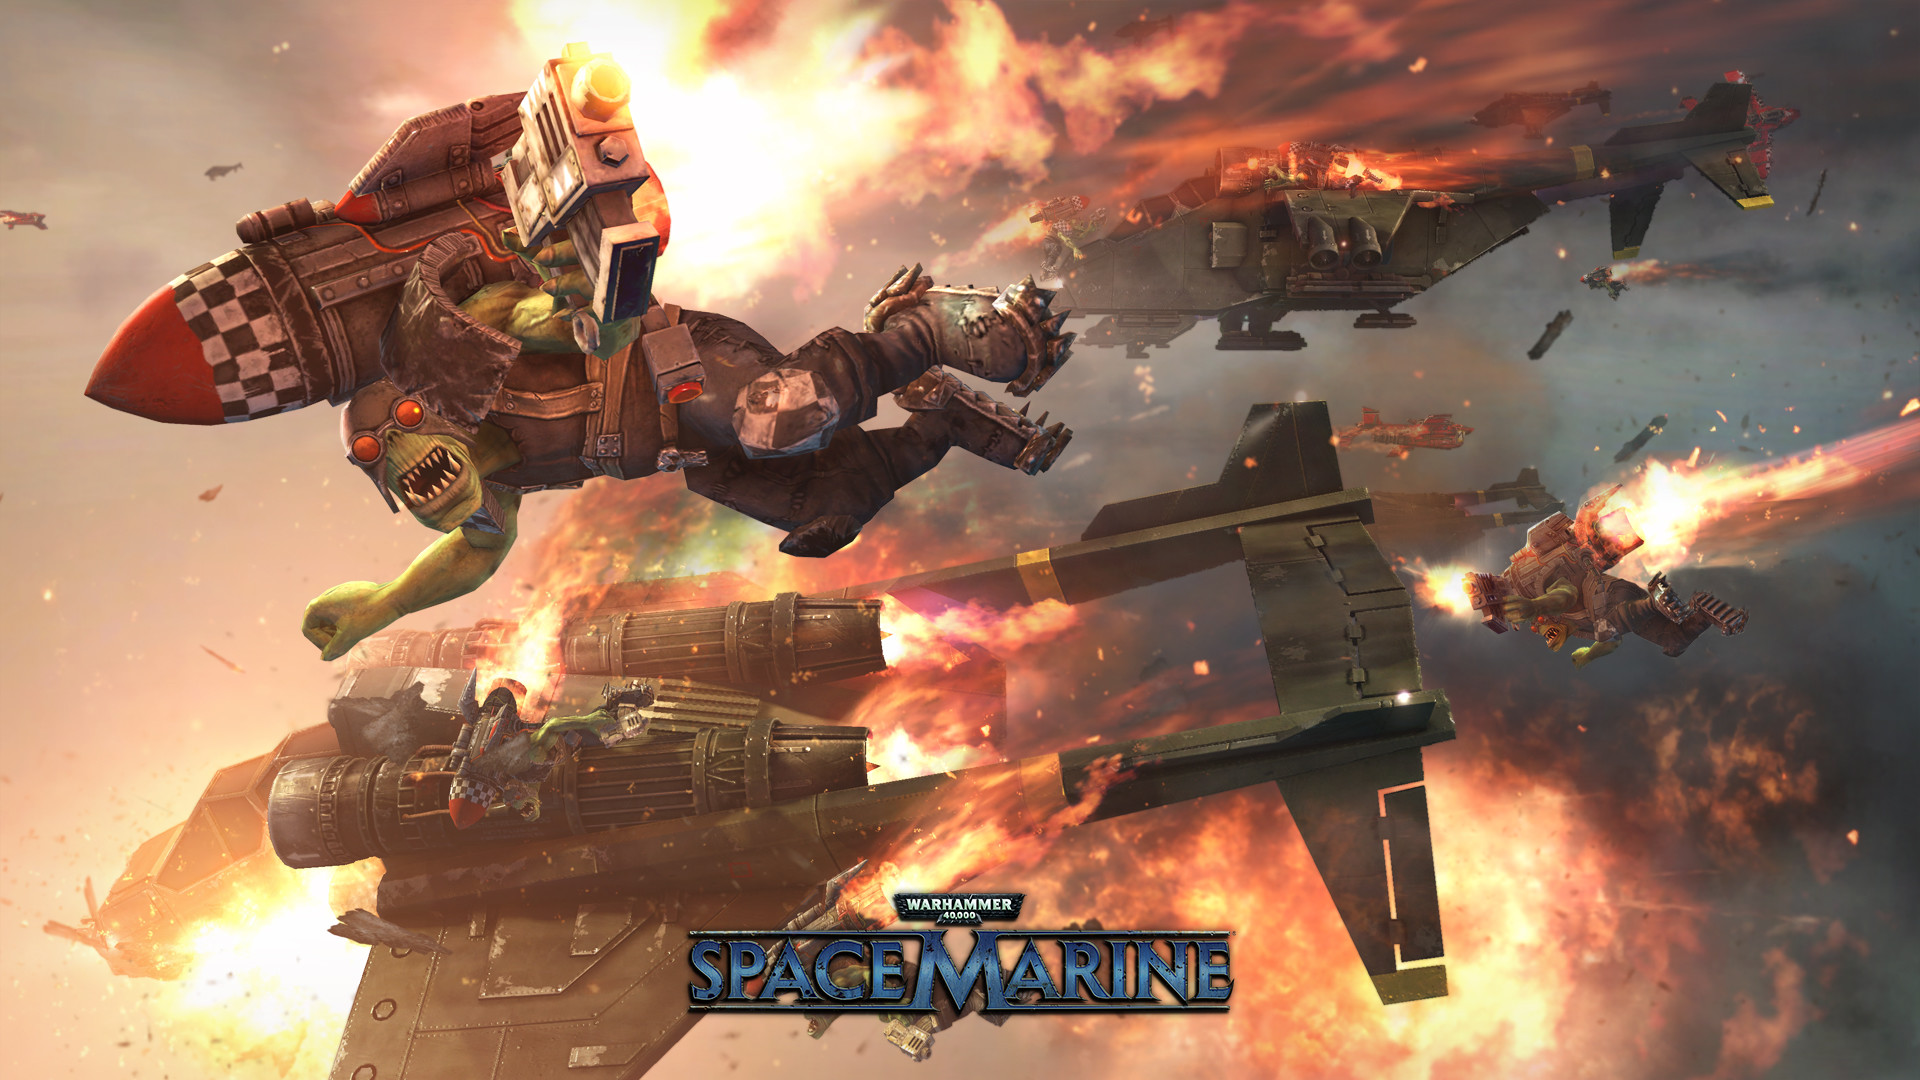 Warhammer 40,000: Space Marine - Anniversary Edition English Language Only Steam CD Key 26.11 $